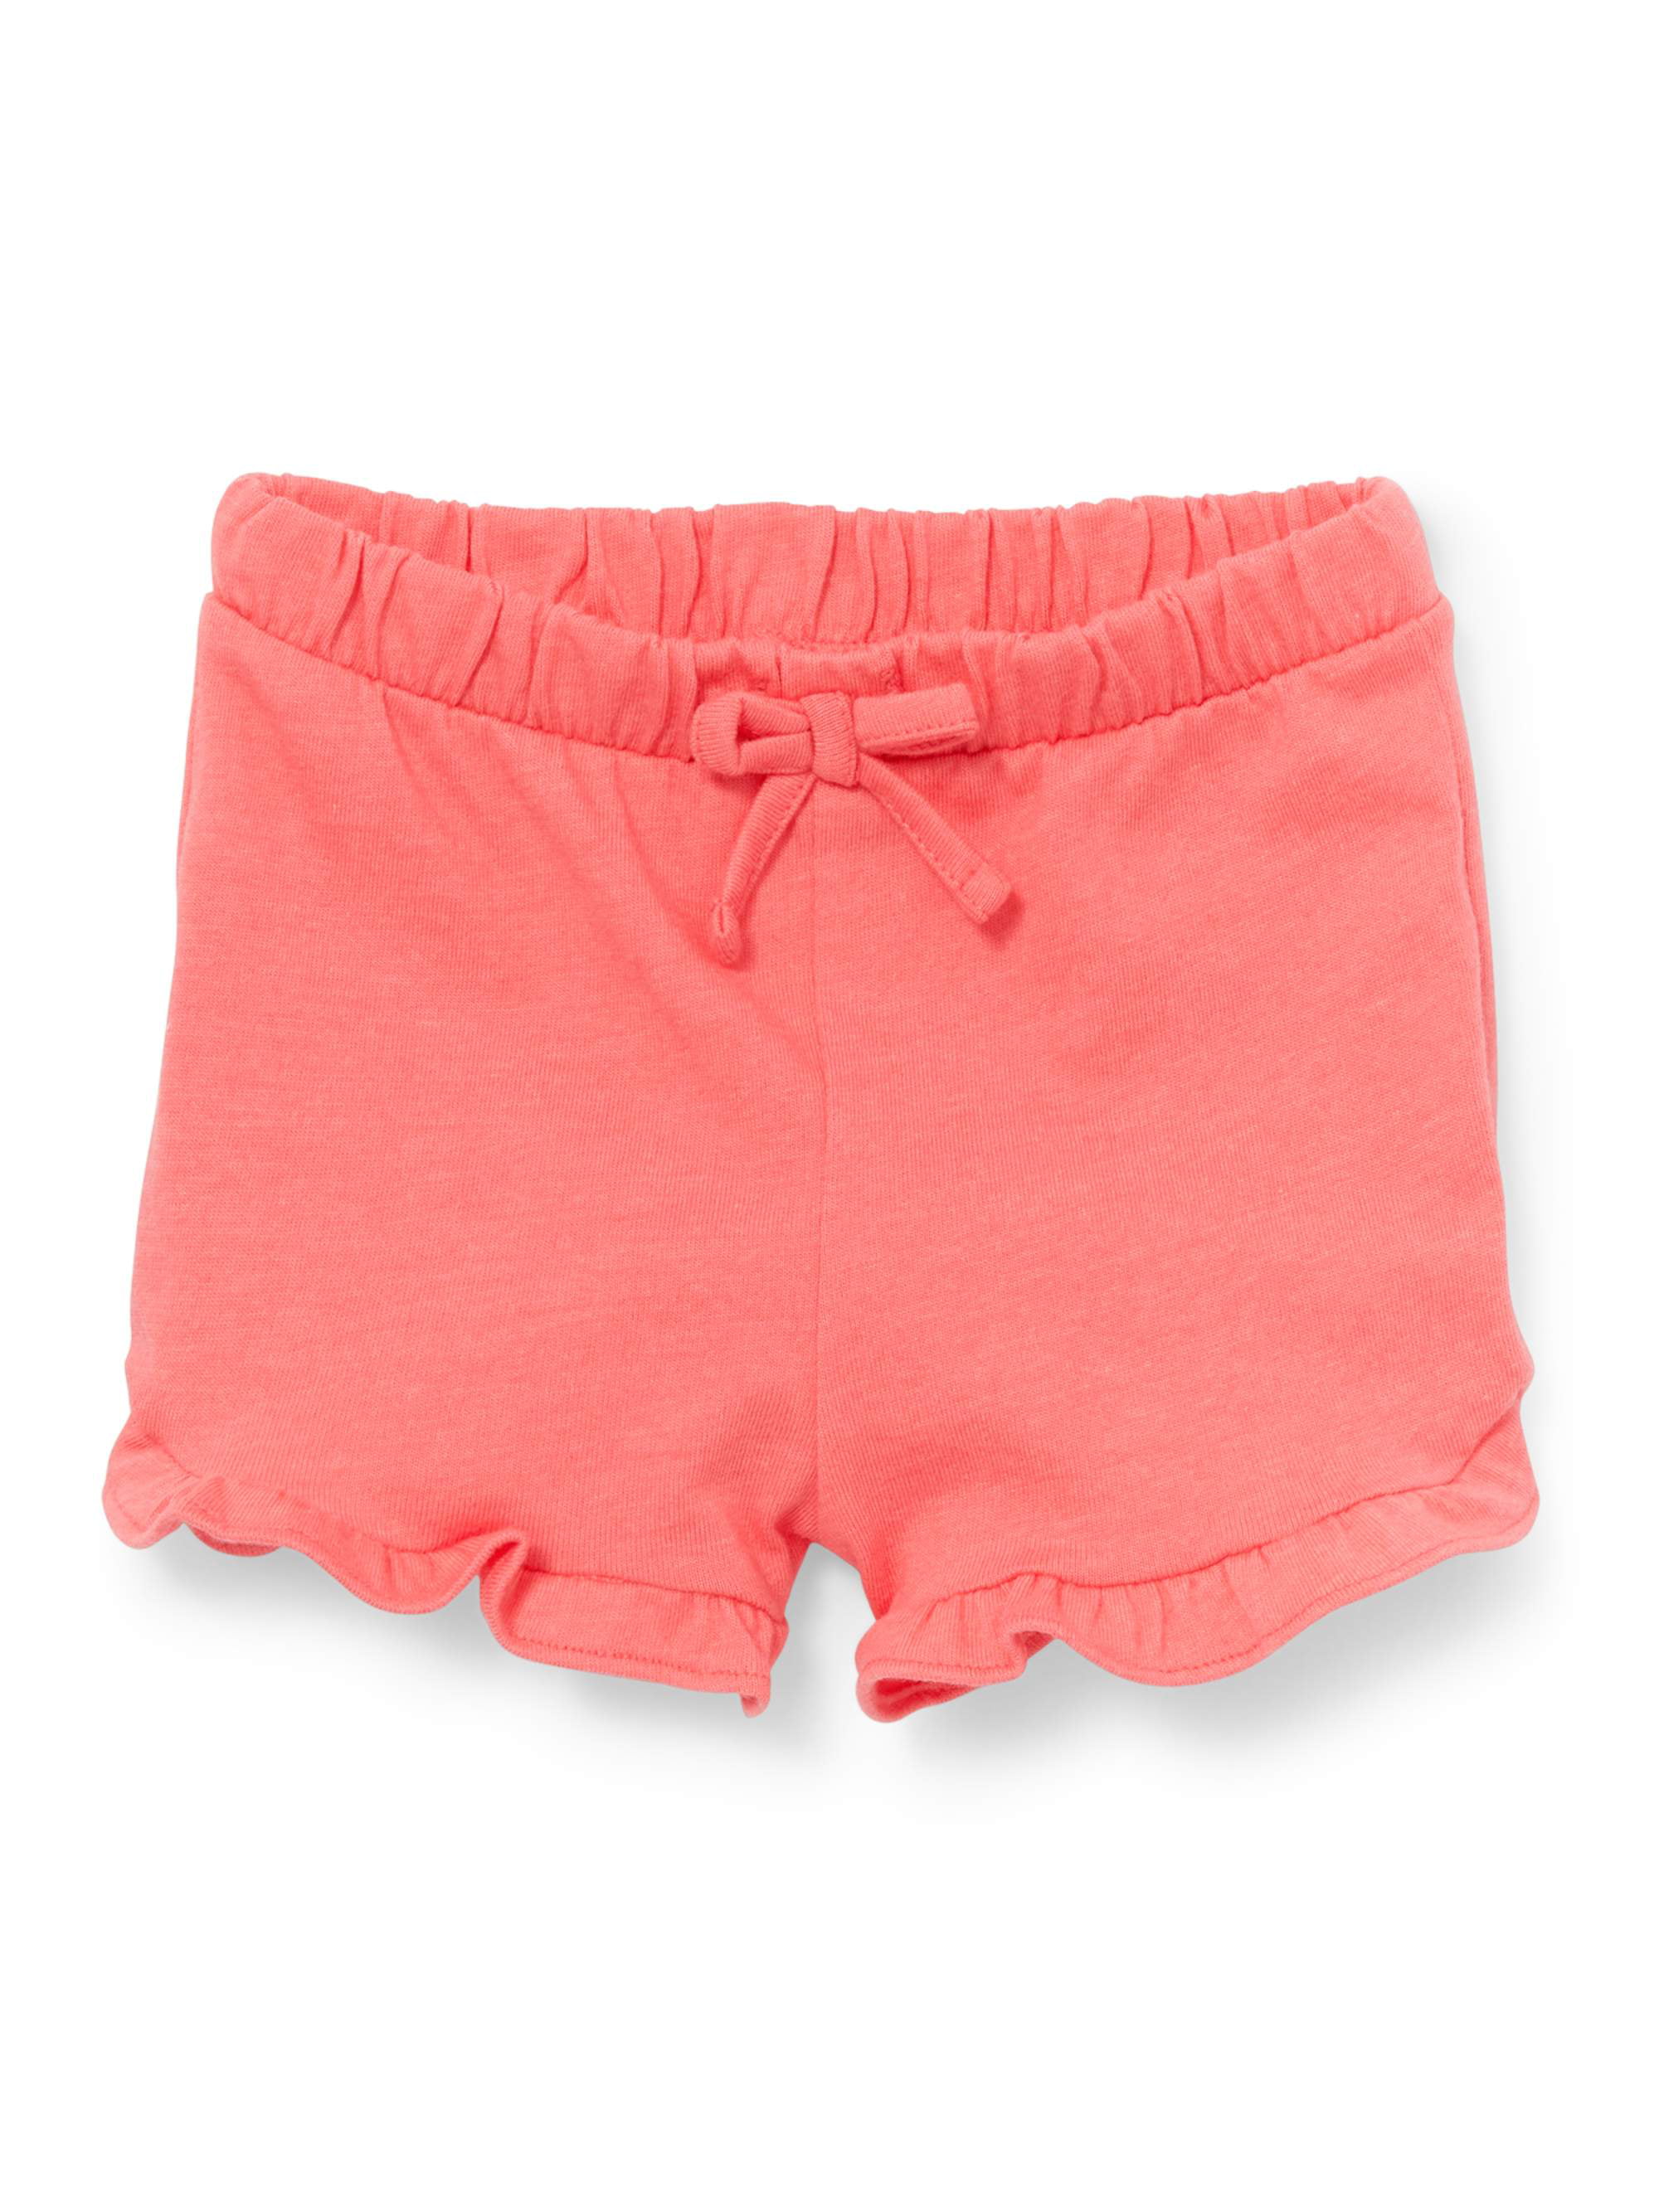 Children's Place Toddler Girls' Ruffle Trim Shorts - Walmart.com